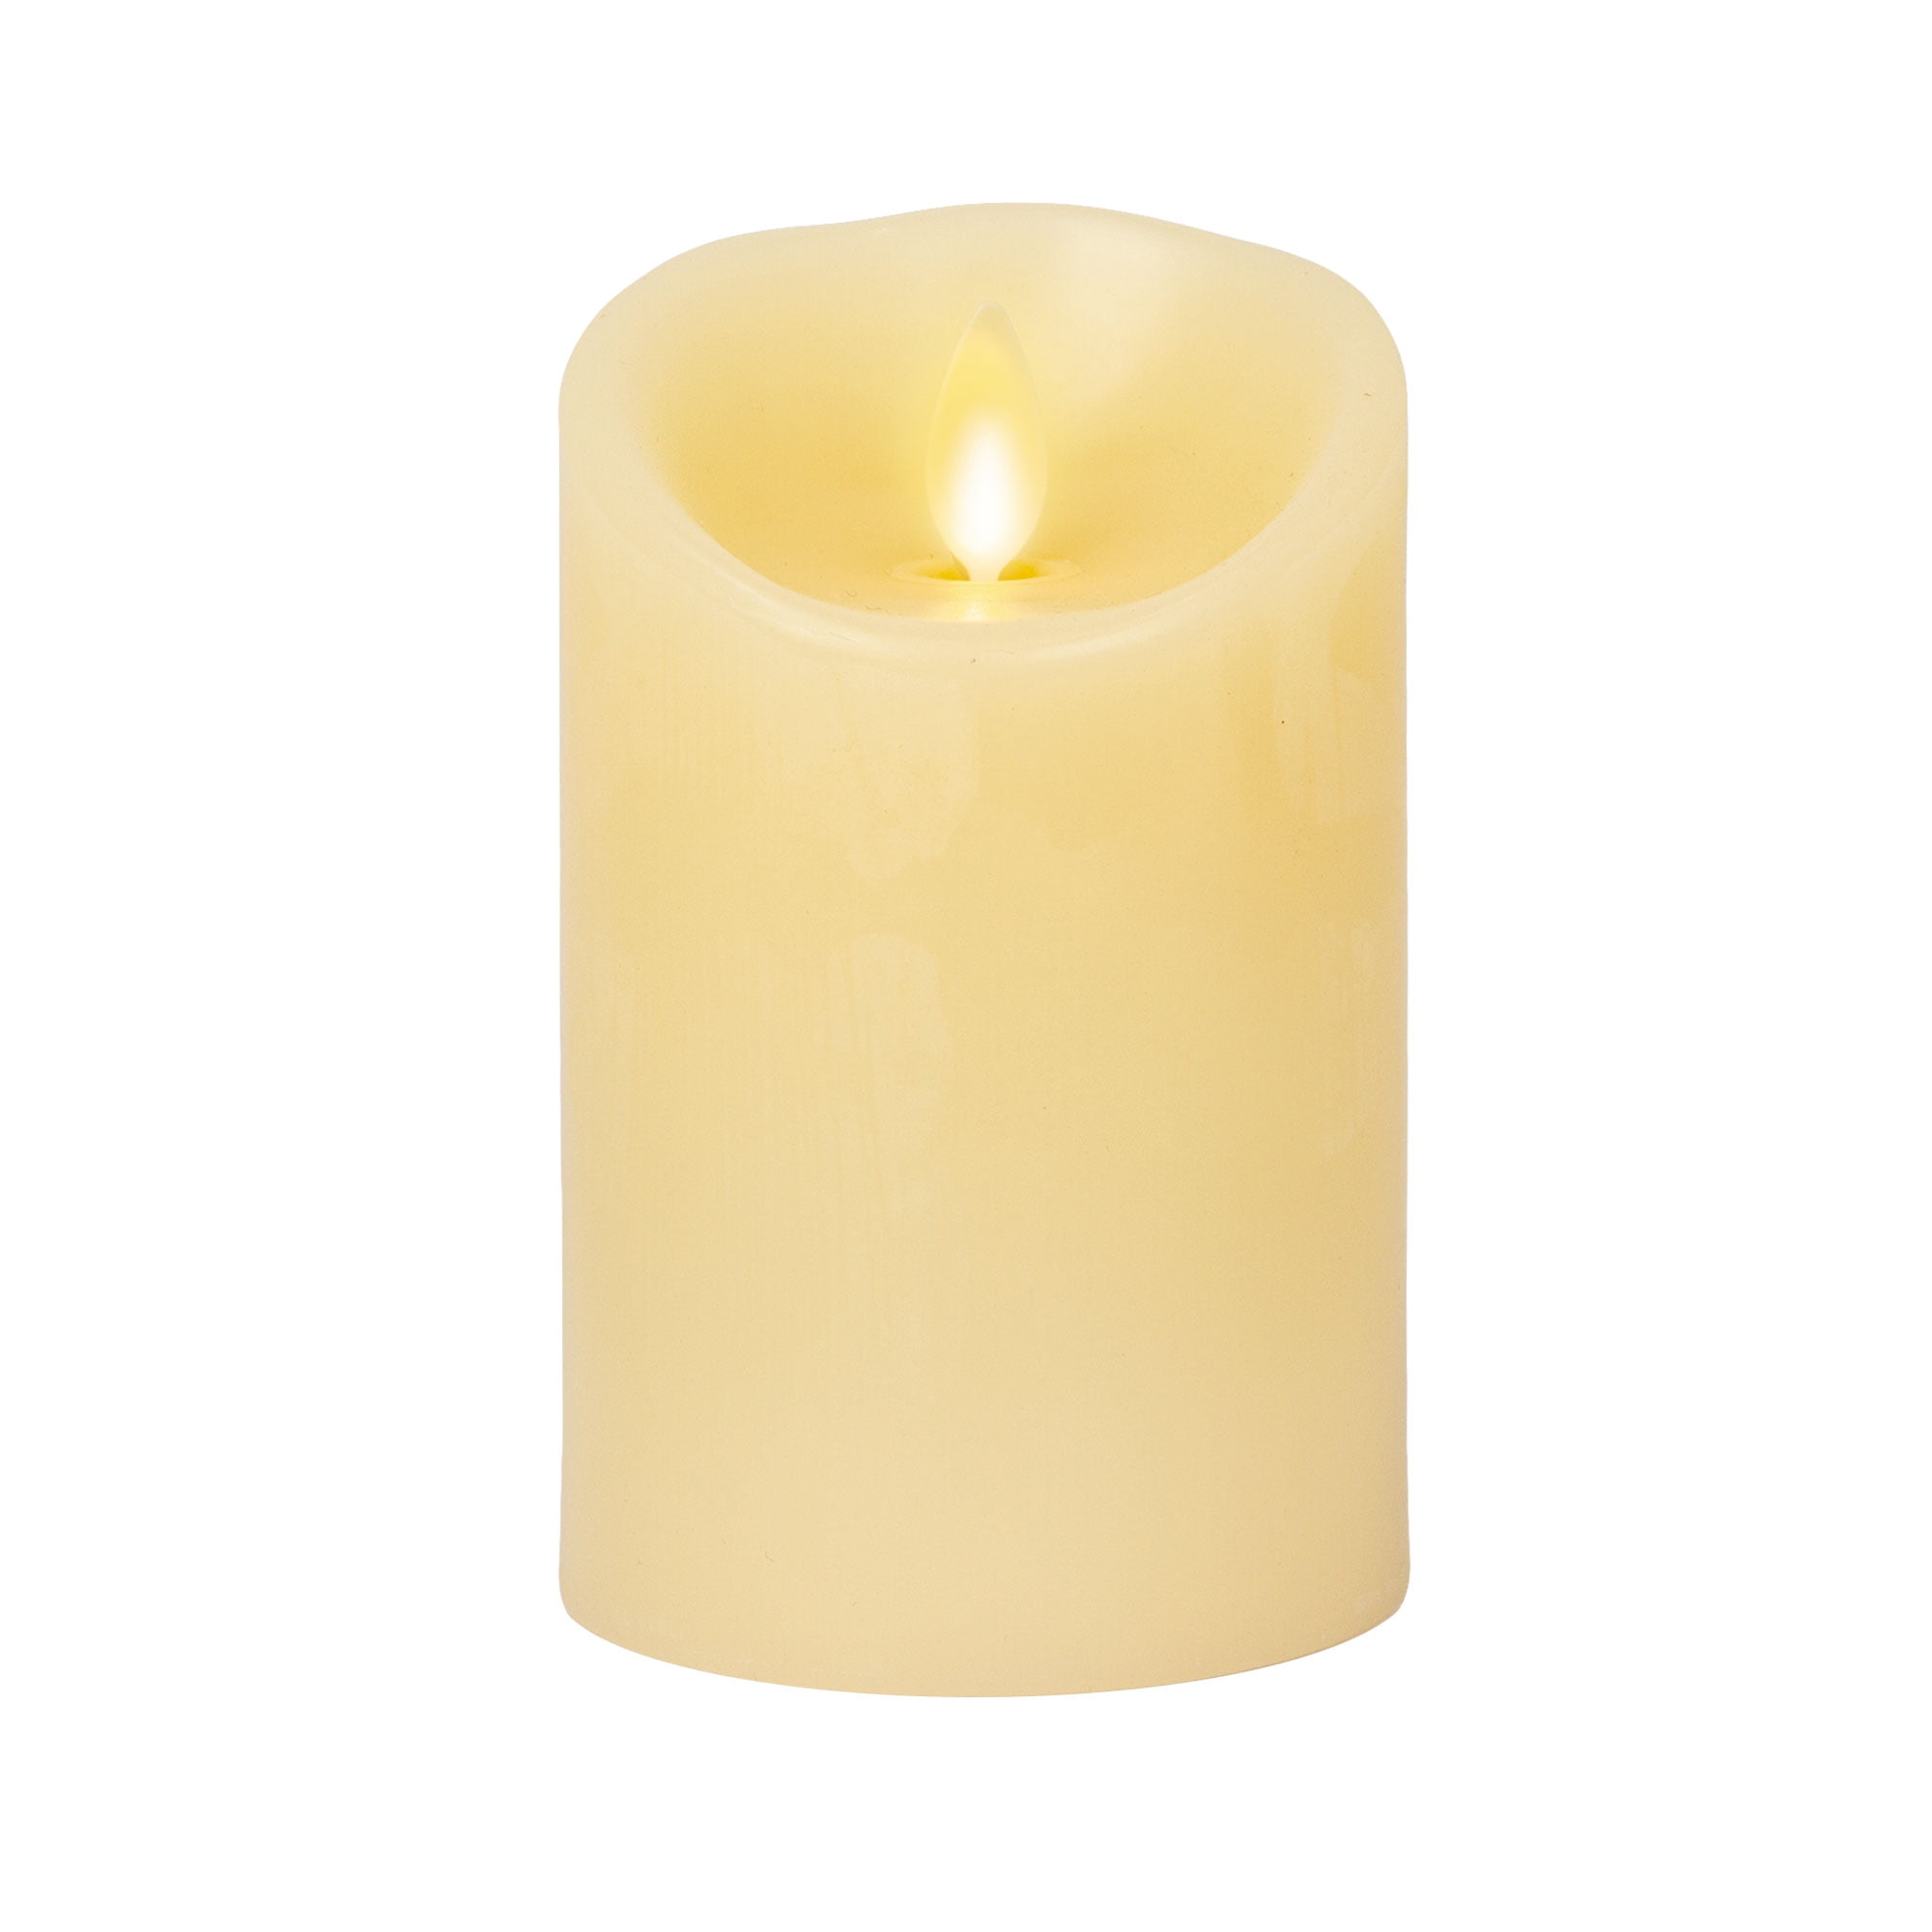 Luminara Moving Flame Pillar LED Candle, Scalloped Edge, Real Wax, Unscented - Ivory (4.5-inch) - Walmart.com